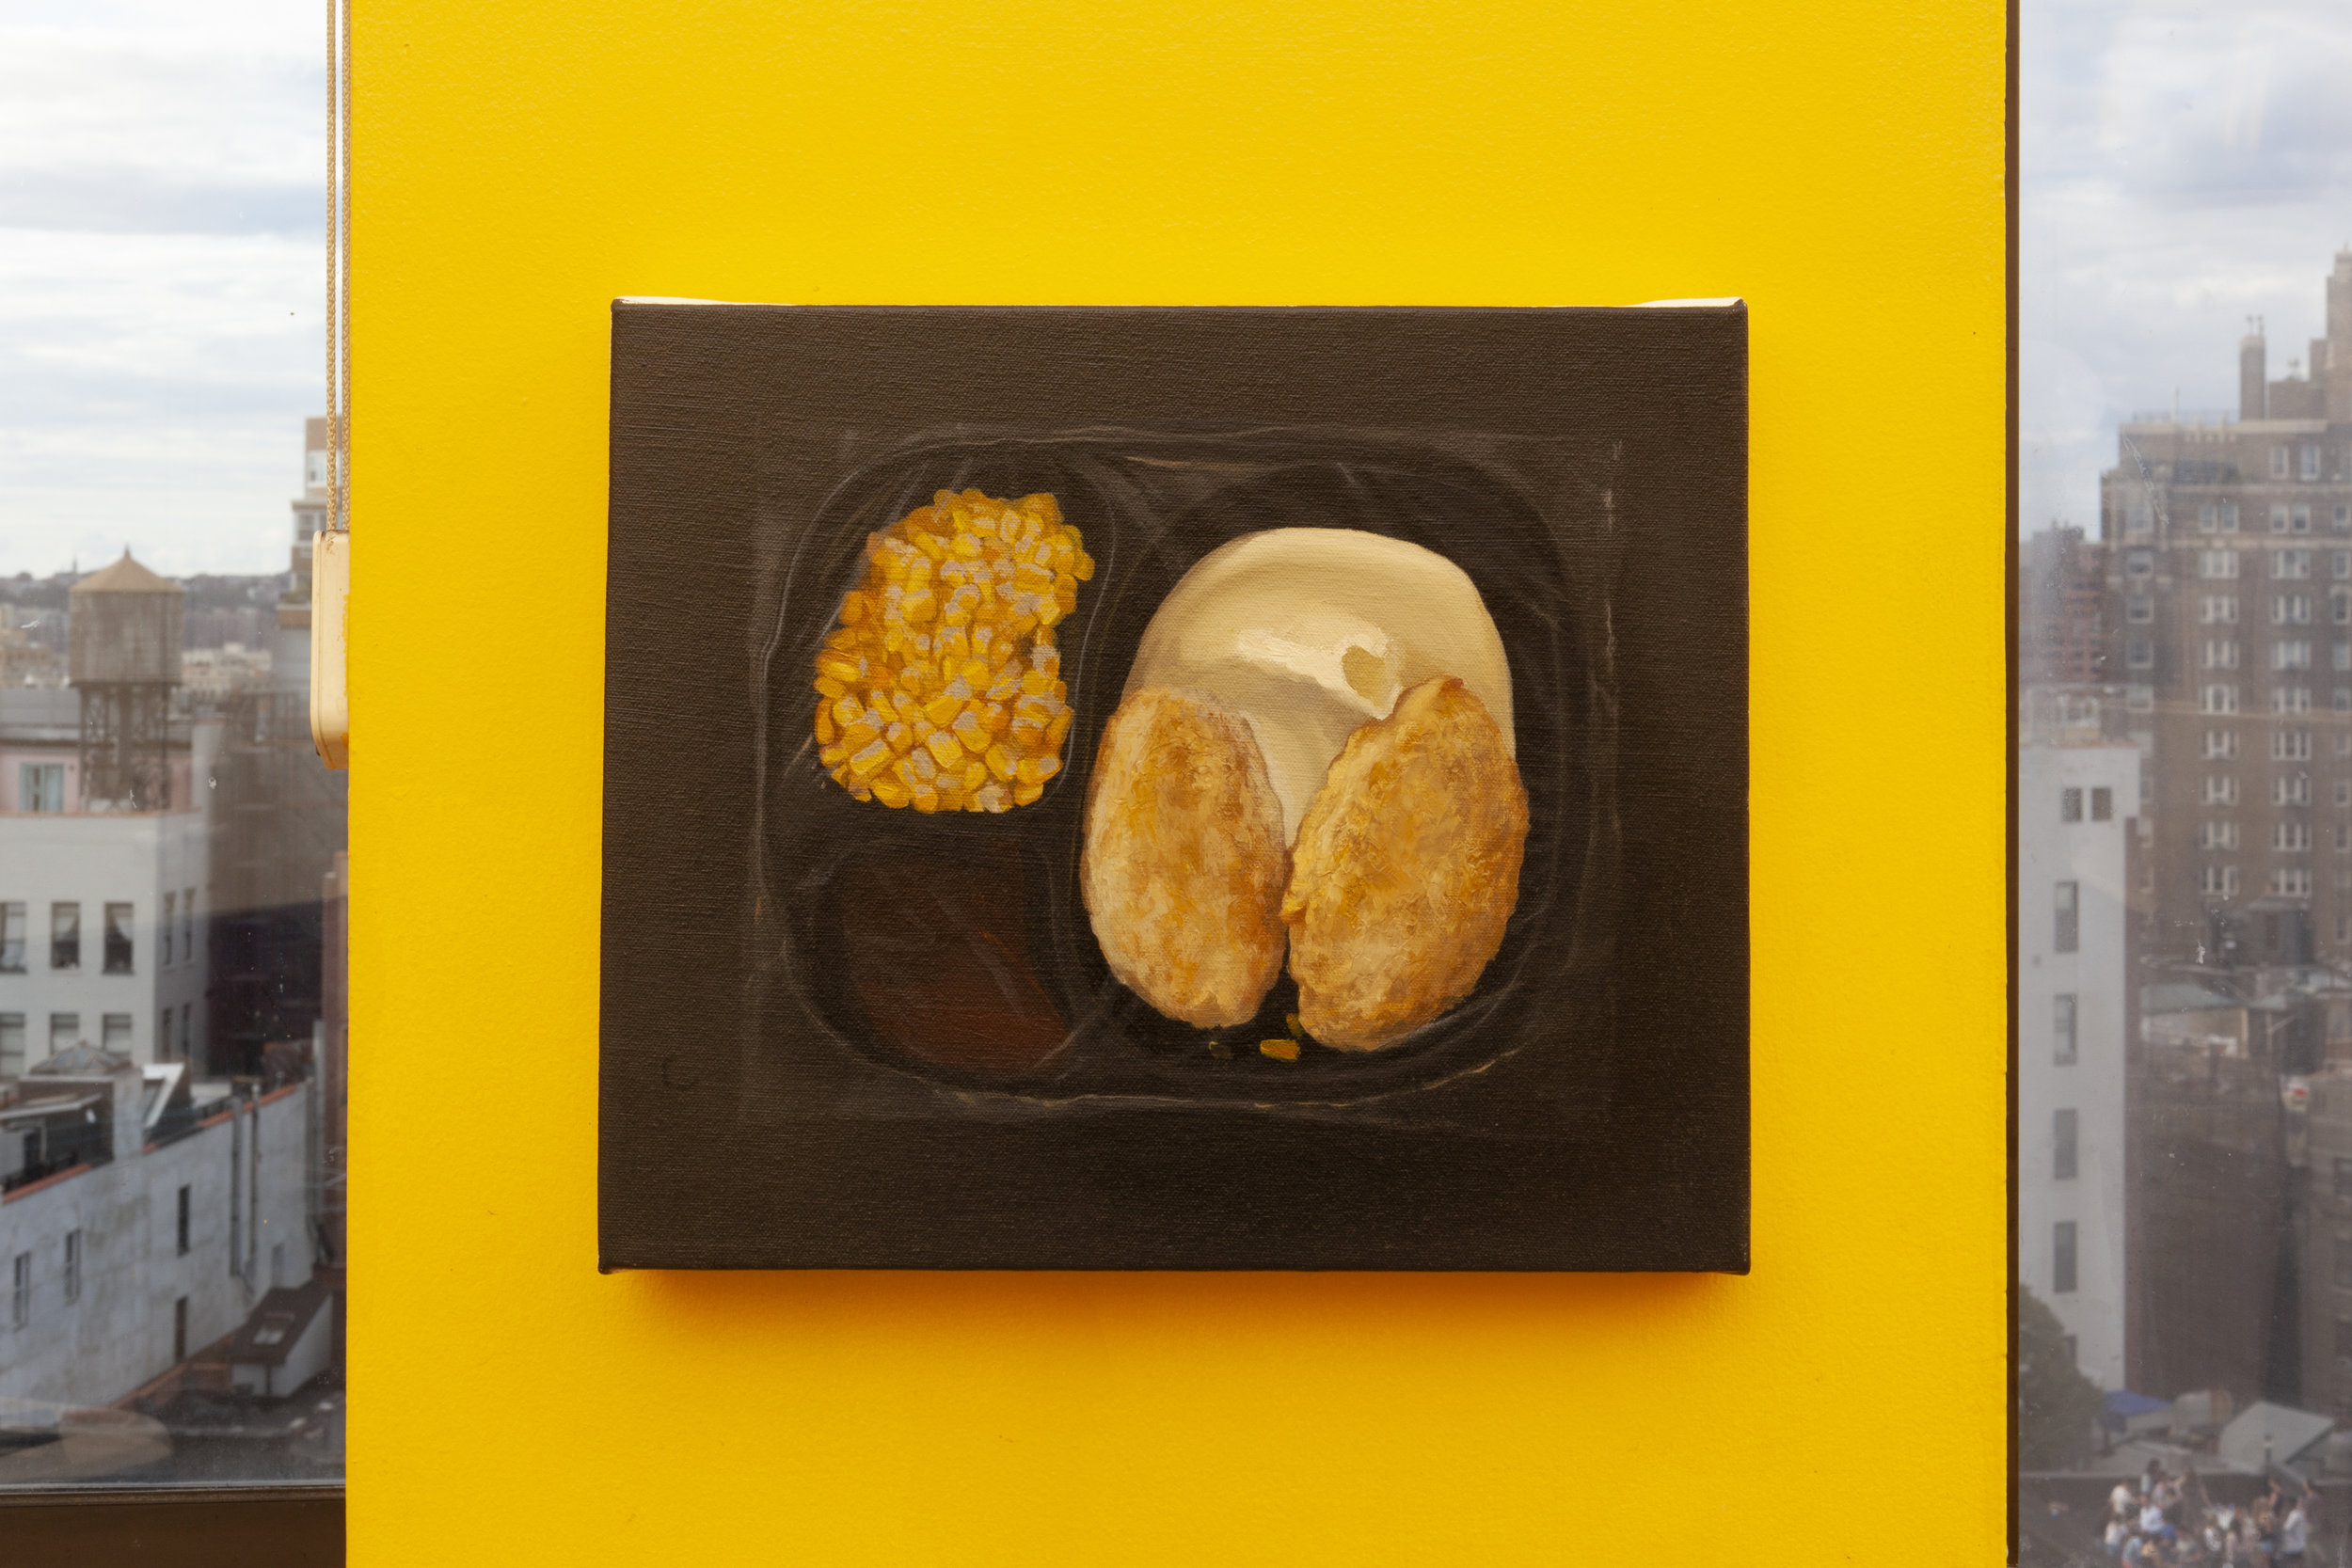  Brandi Twilley,  Hungry Man Boneless Chicken Dinner , 2018, Oil on canvas, 11.5 x 13.75 in 